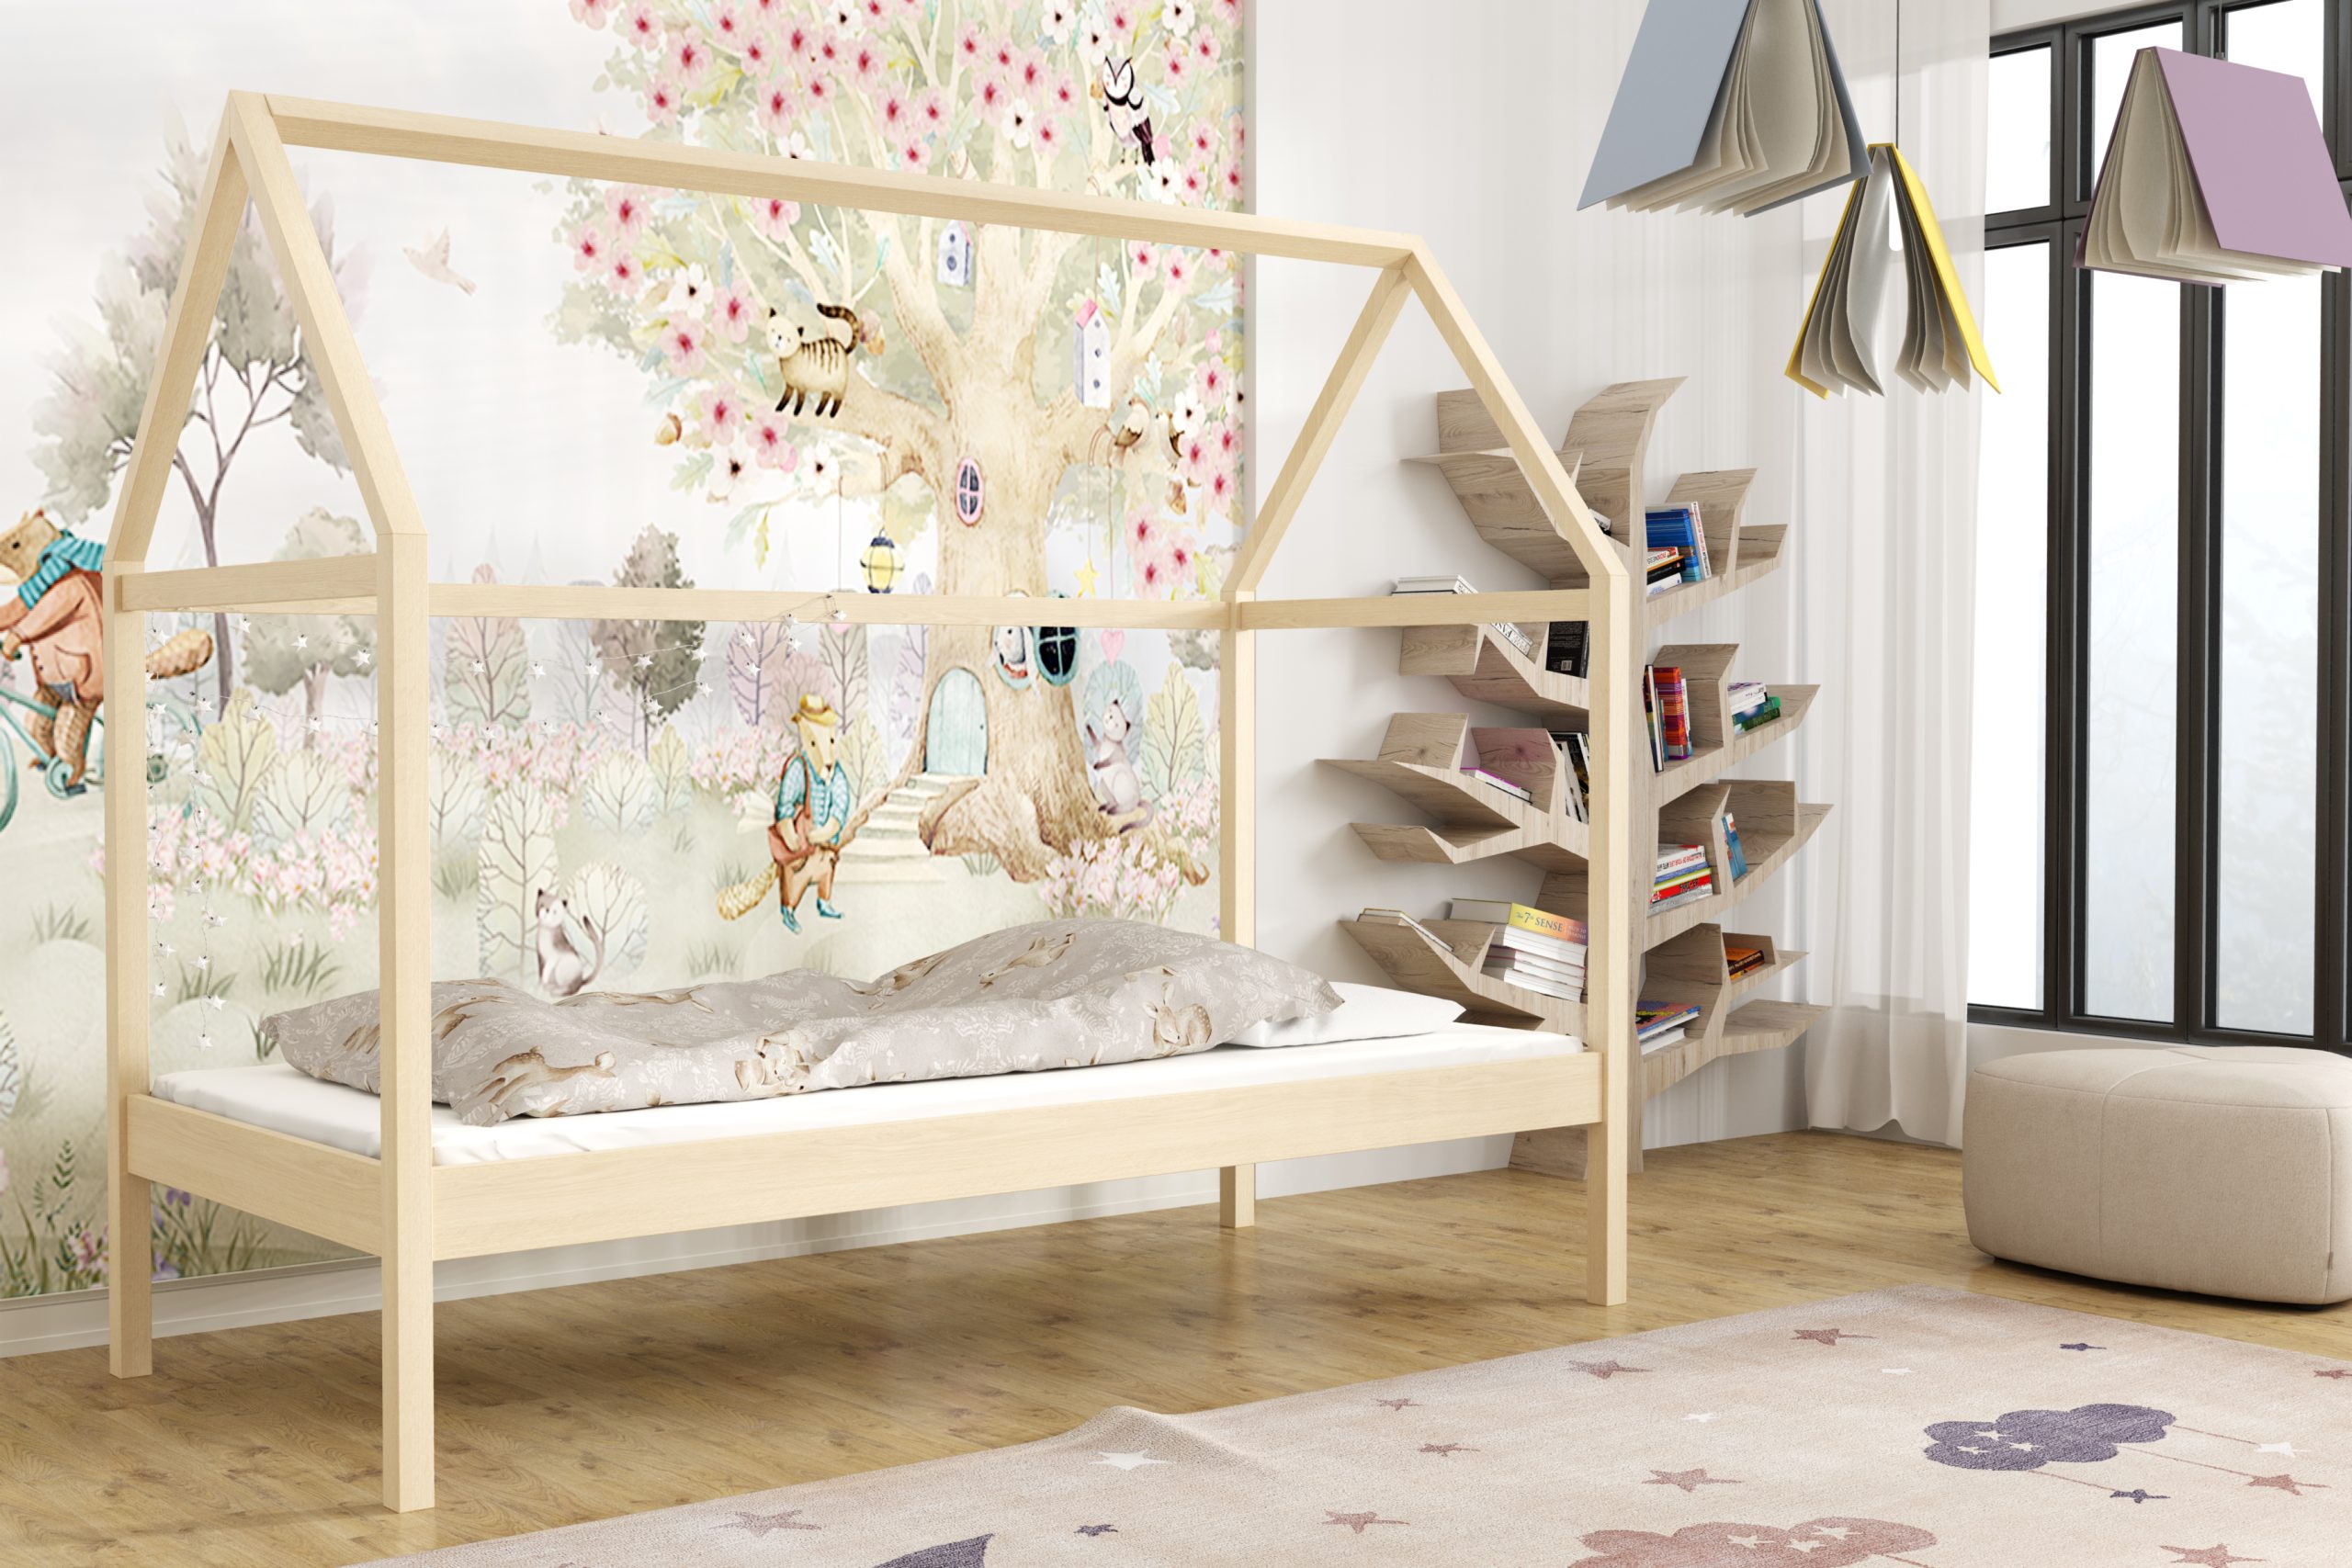 Dětská postel NEEKO KIDBED ONE ze dřeva + rošt Barva: surové dřevo, Rozměr: 80 x 200 cm, Zásuvky: ano